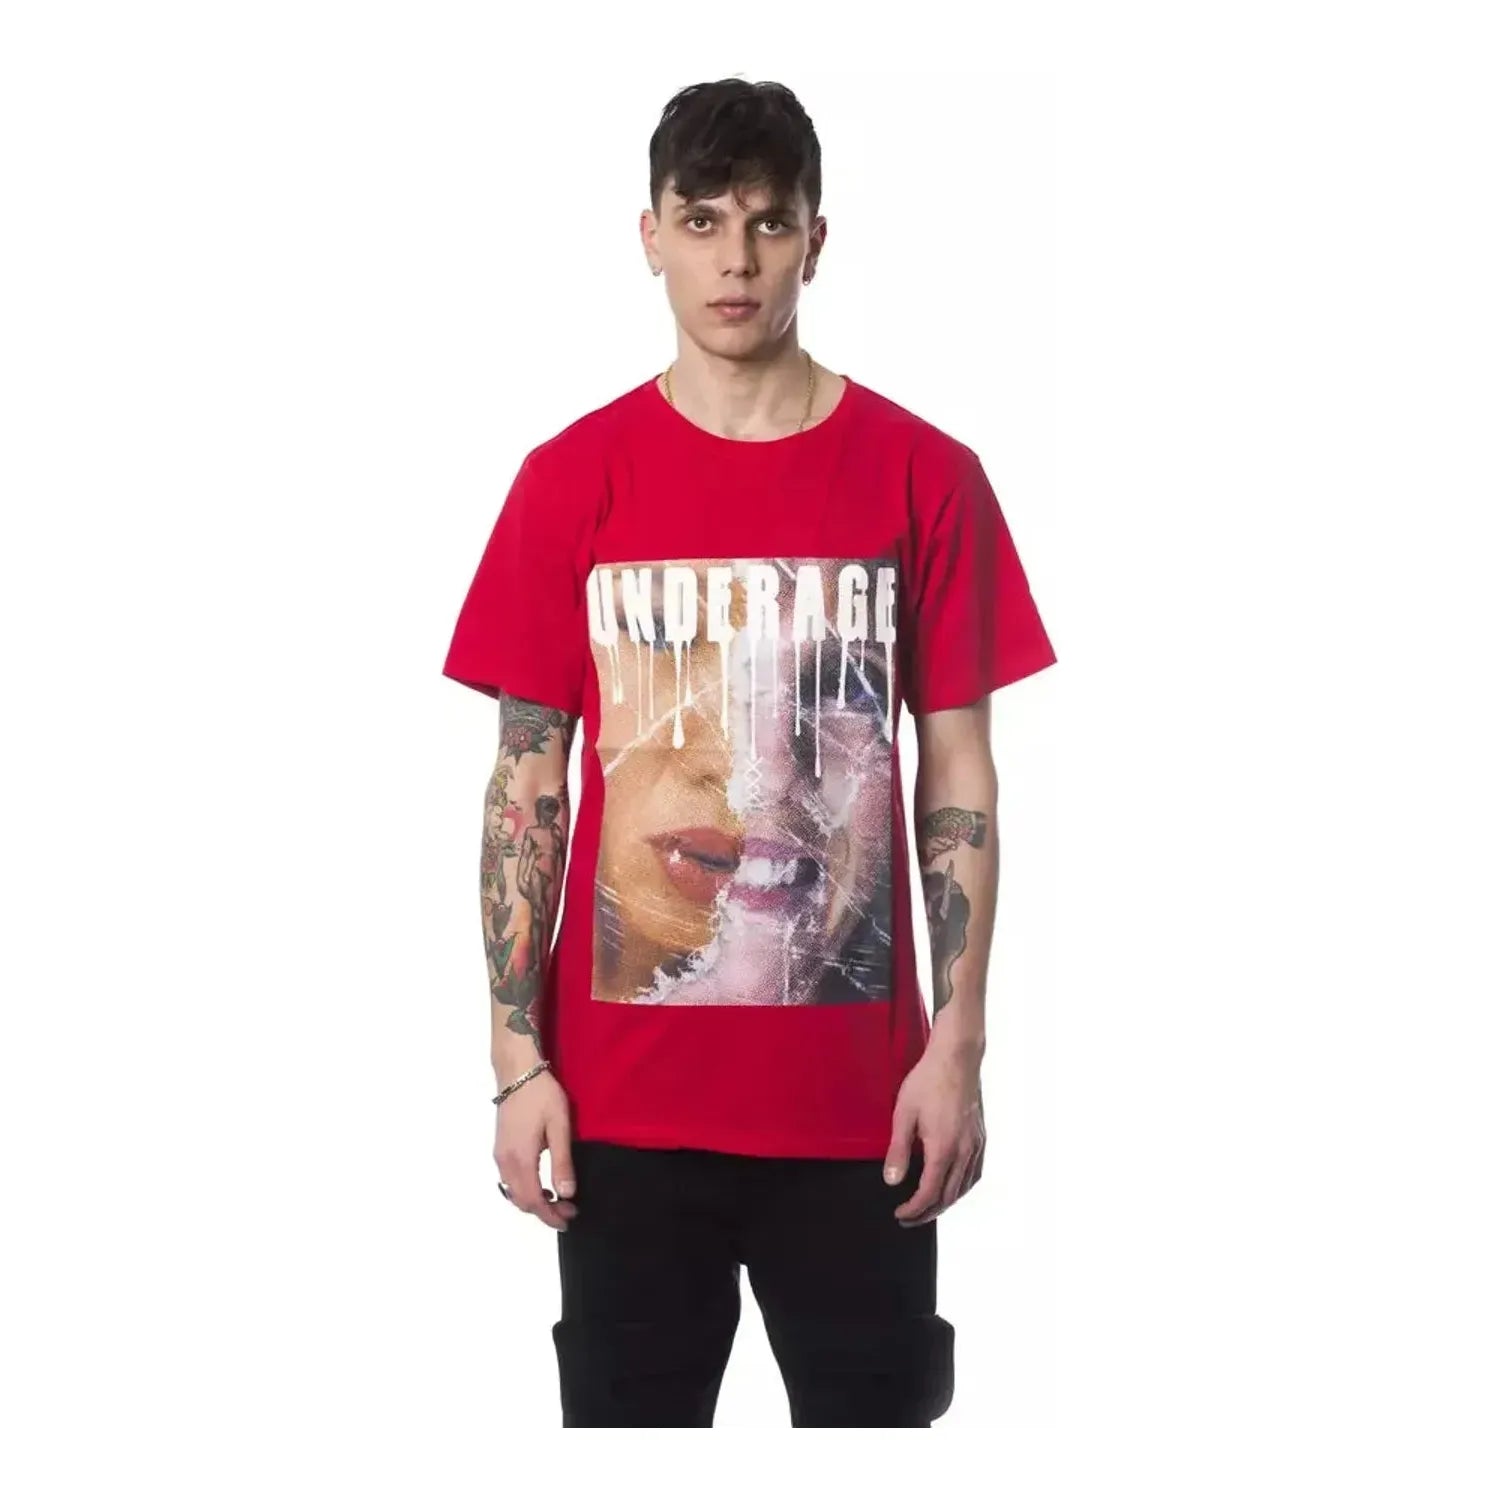 Nicolo Tonetto | Red Cotton T-Shirt | McRichard Designer Brands